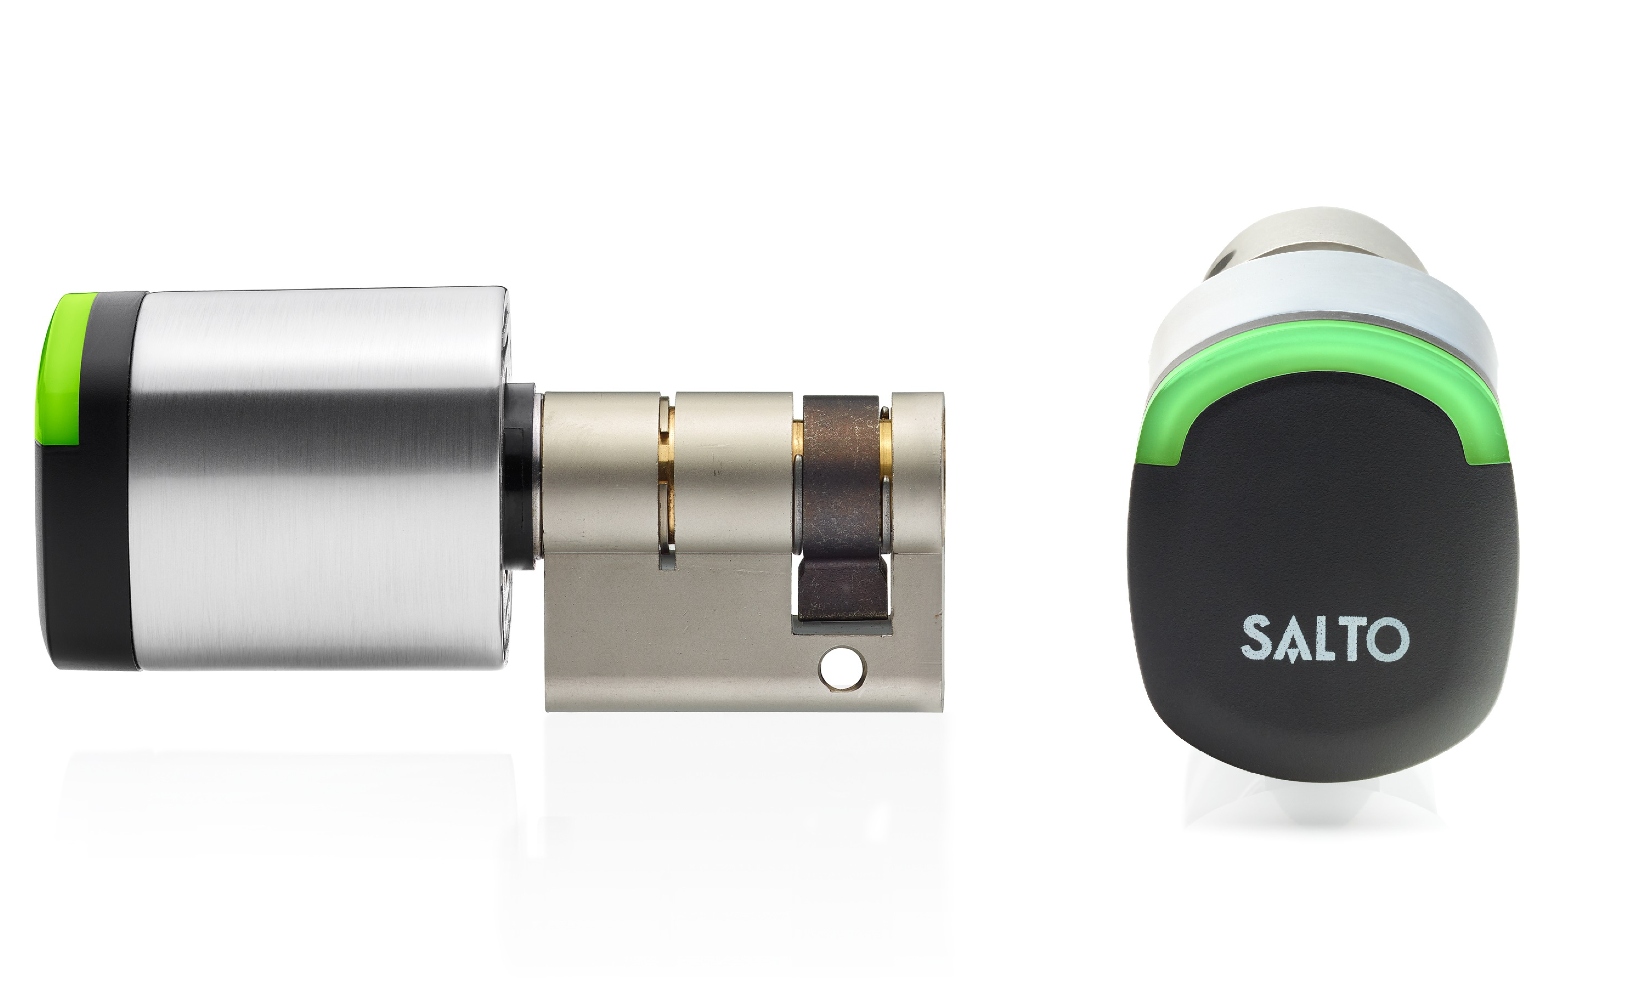 SALTO Neo electronic cylinder gains BSI Enhanced Level IoT Kitemark™